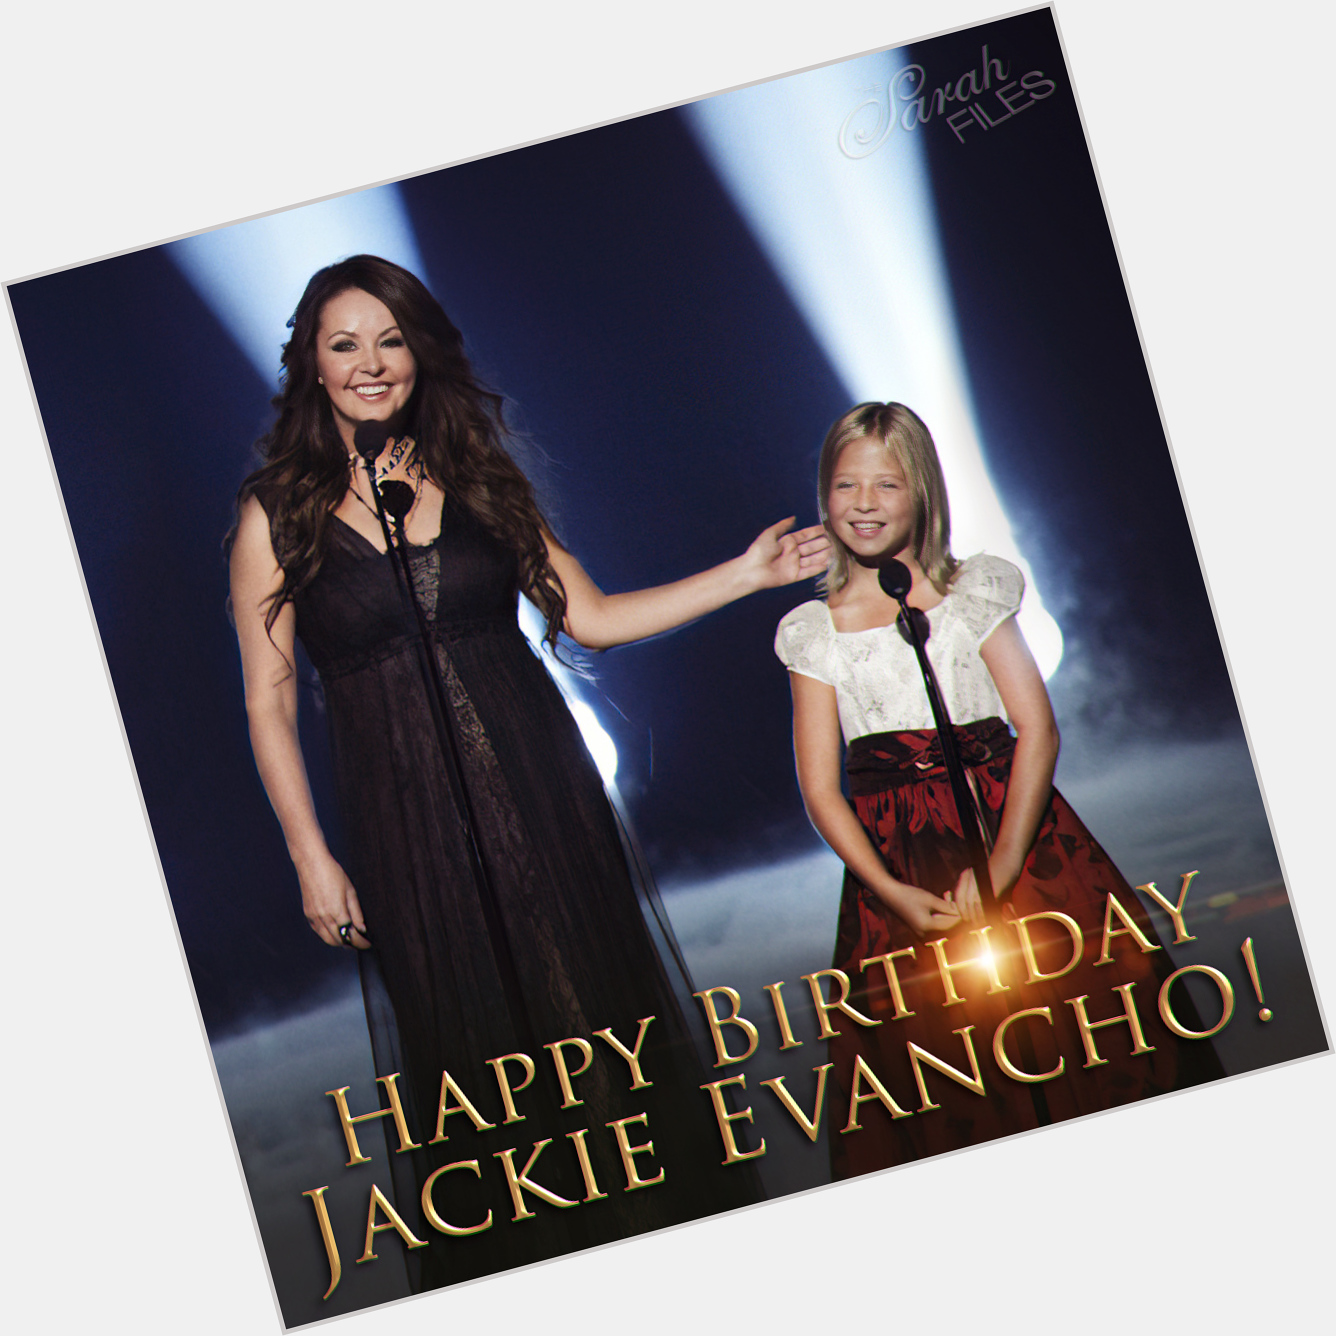 Happy 23rd birthday, Jackie Evancho!   